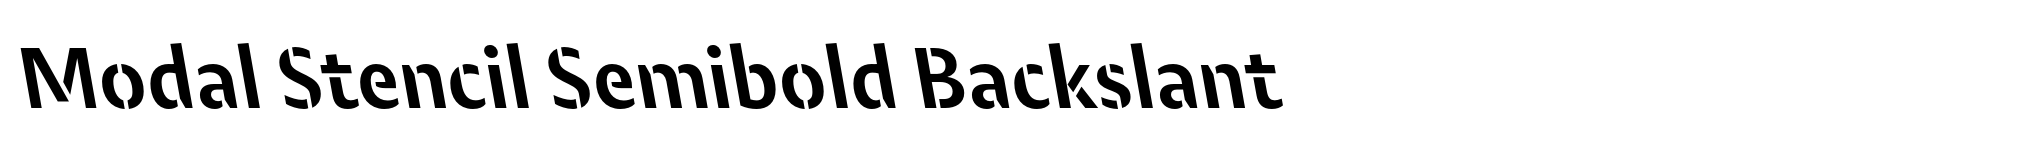 Modal Stencil Semibold Backslant image